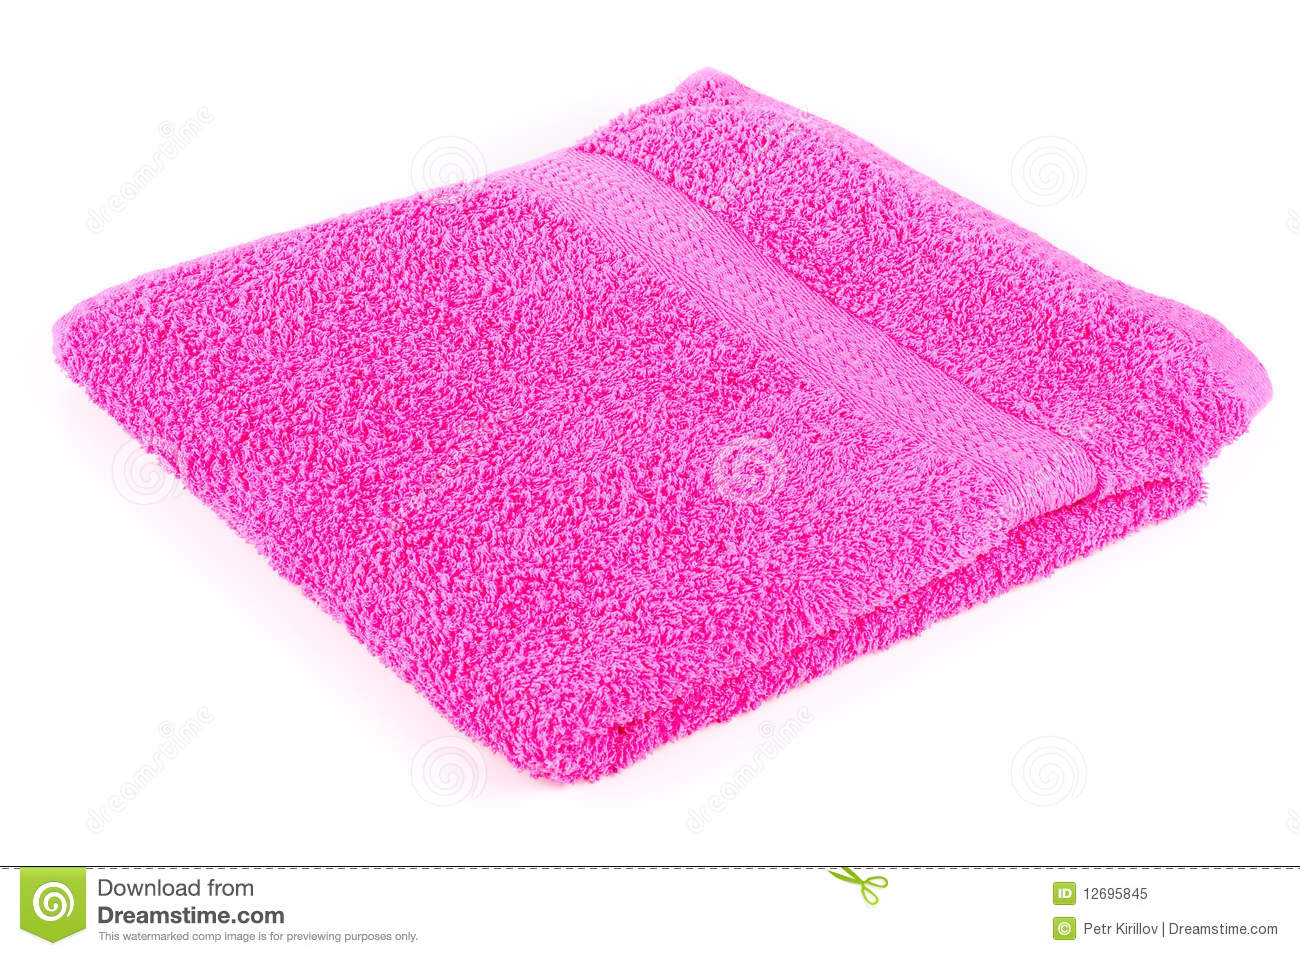 Face towel clipart.